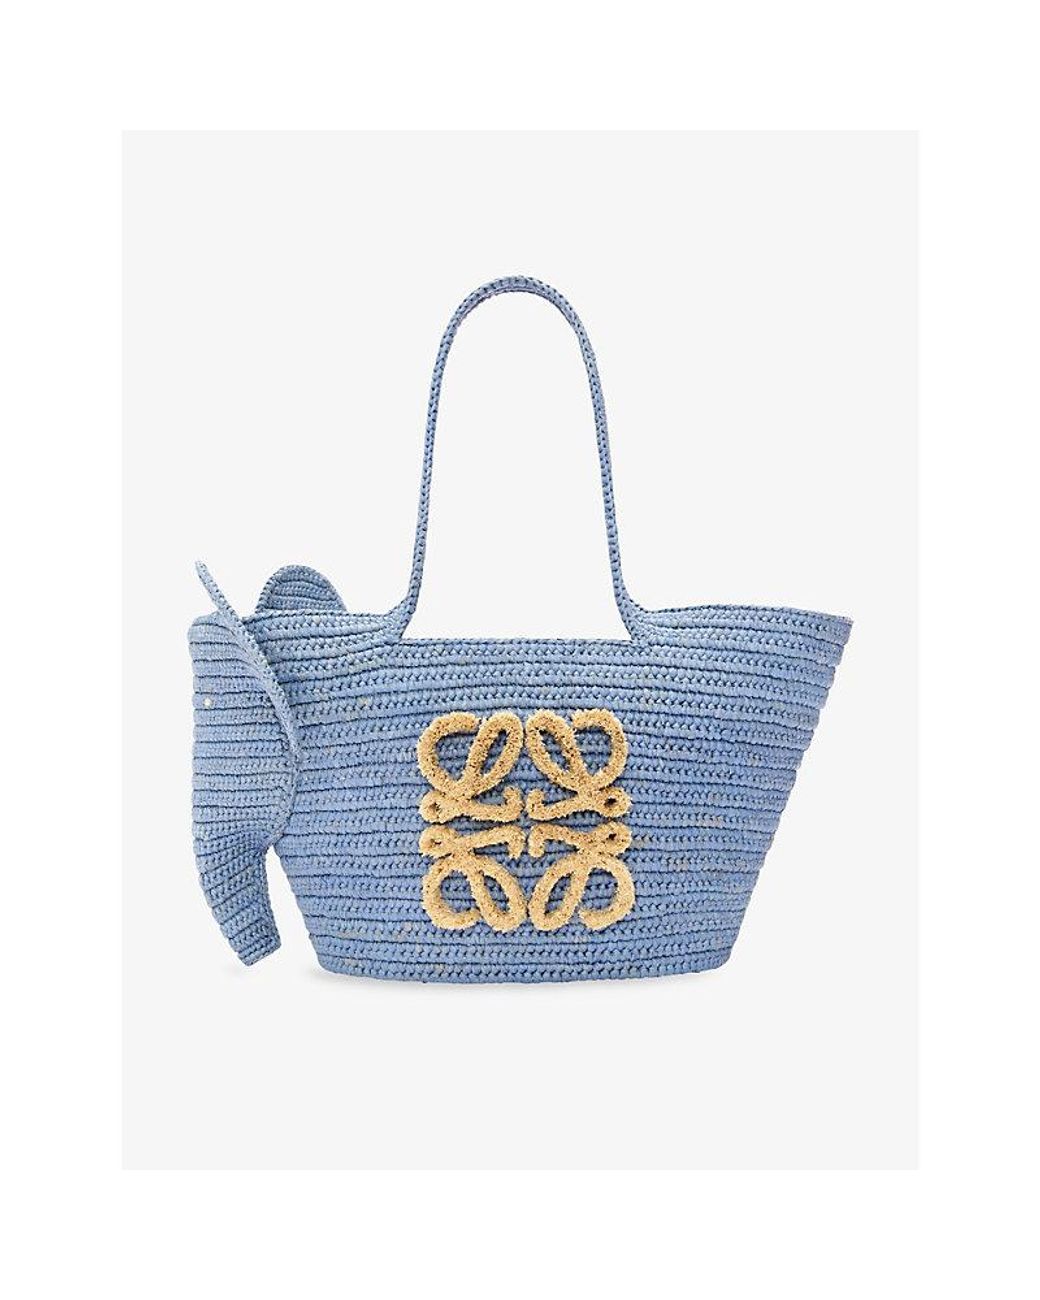 Loewe X Paula's Ibiza Elephant Woven Shoulder Basket Bag in Blue